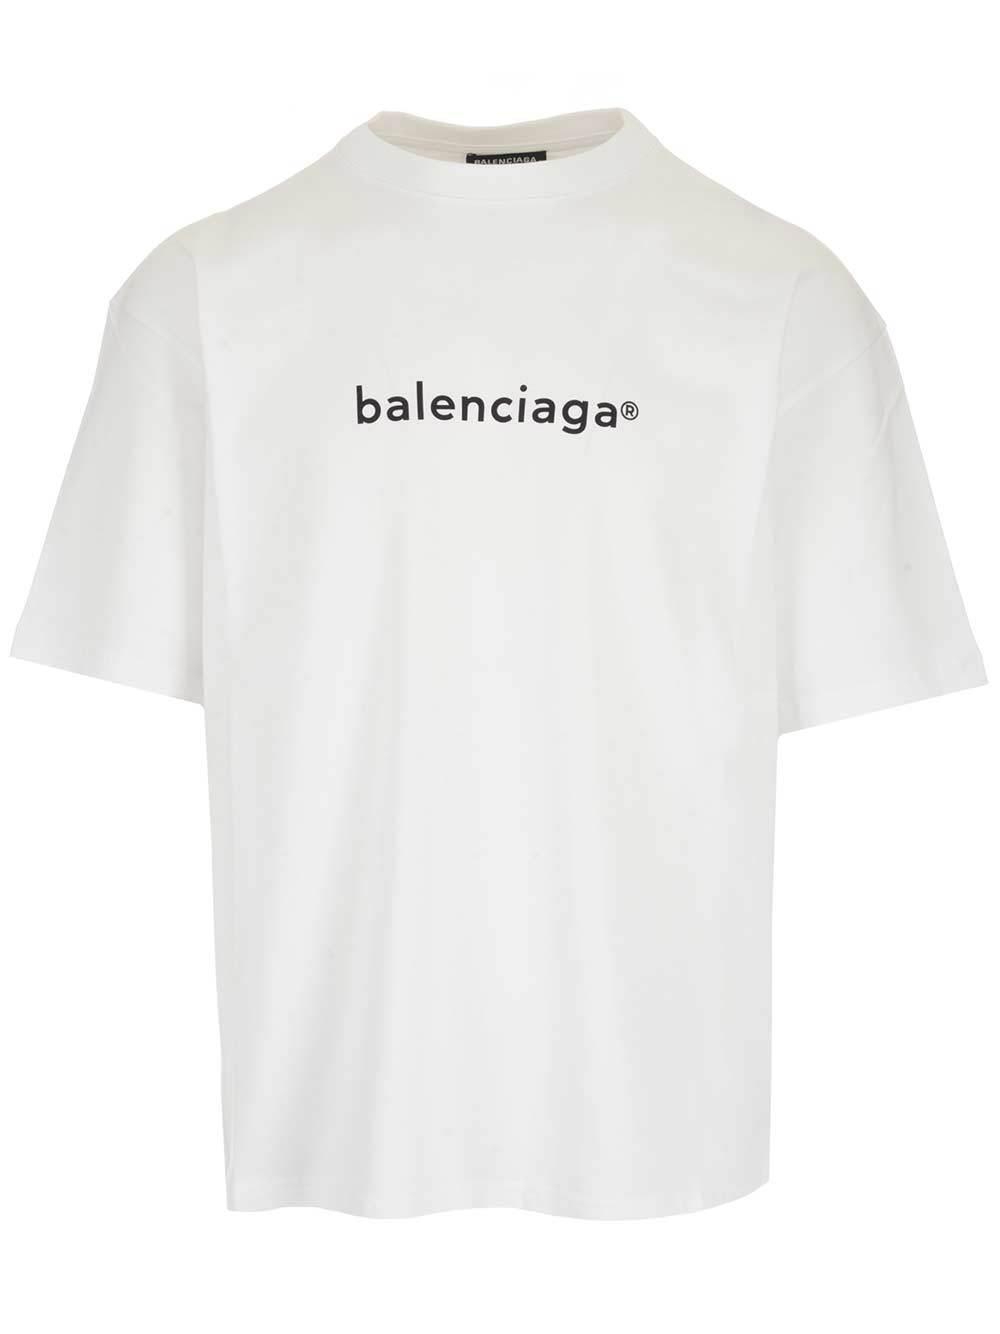 Balenciaga Cotton Logo Print T-shirt in White for Men - Lyst